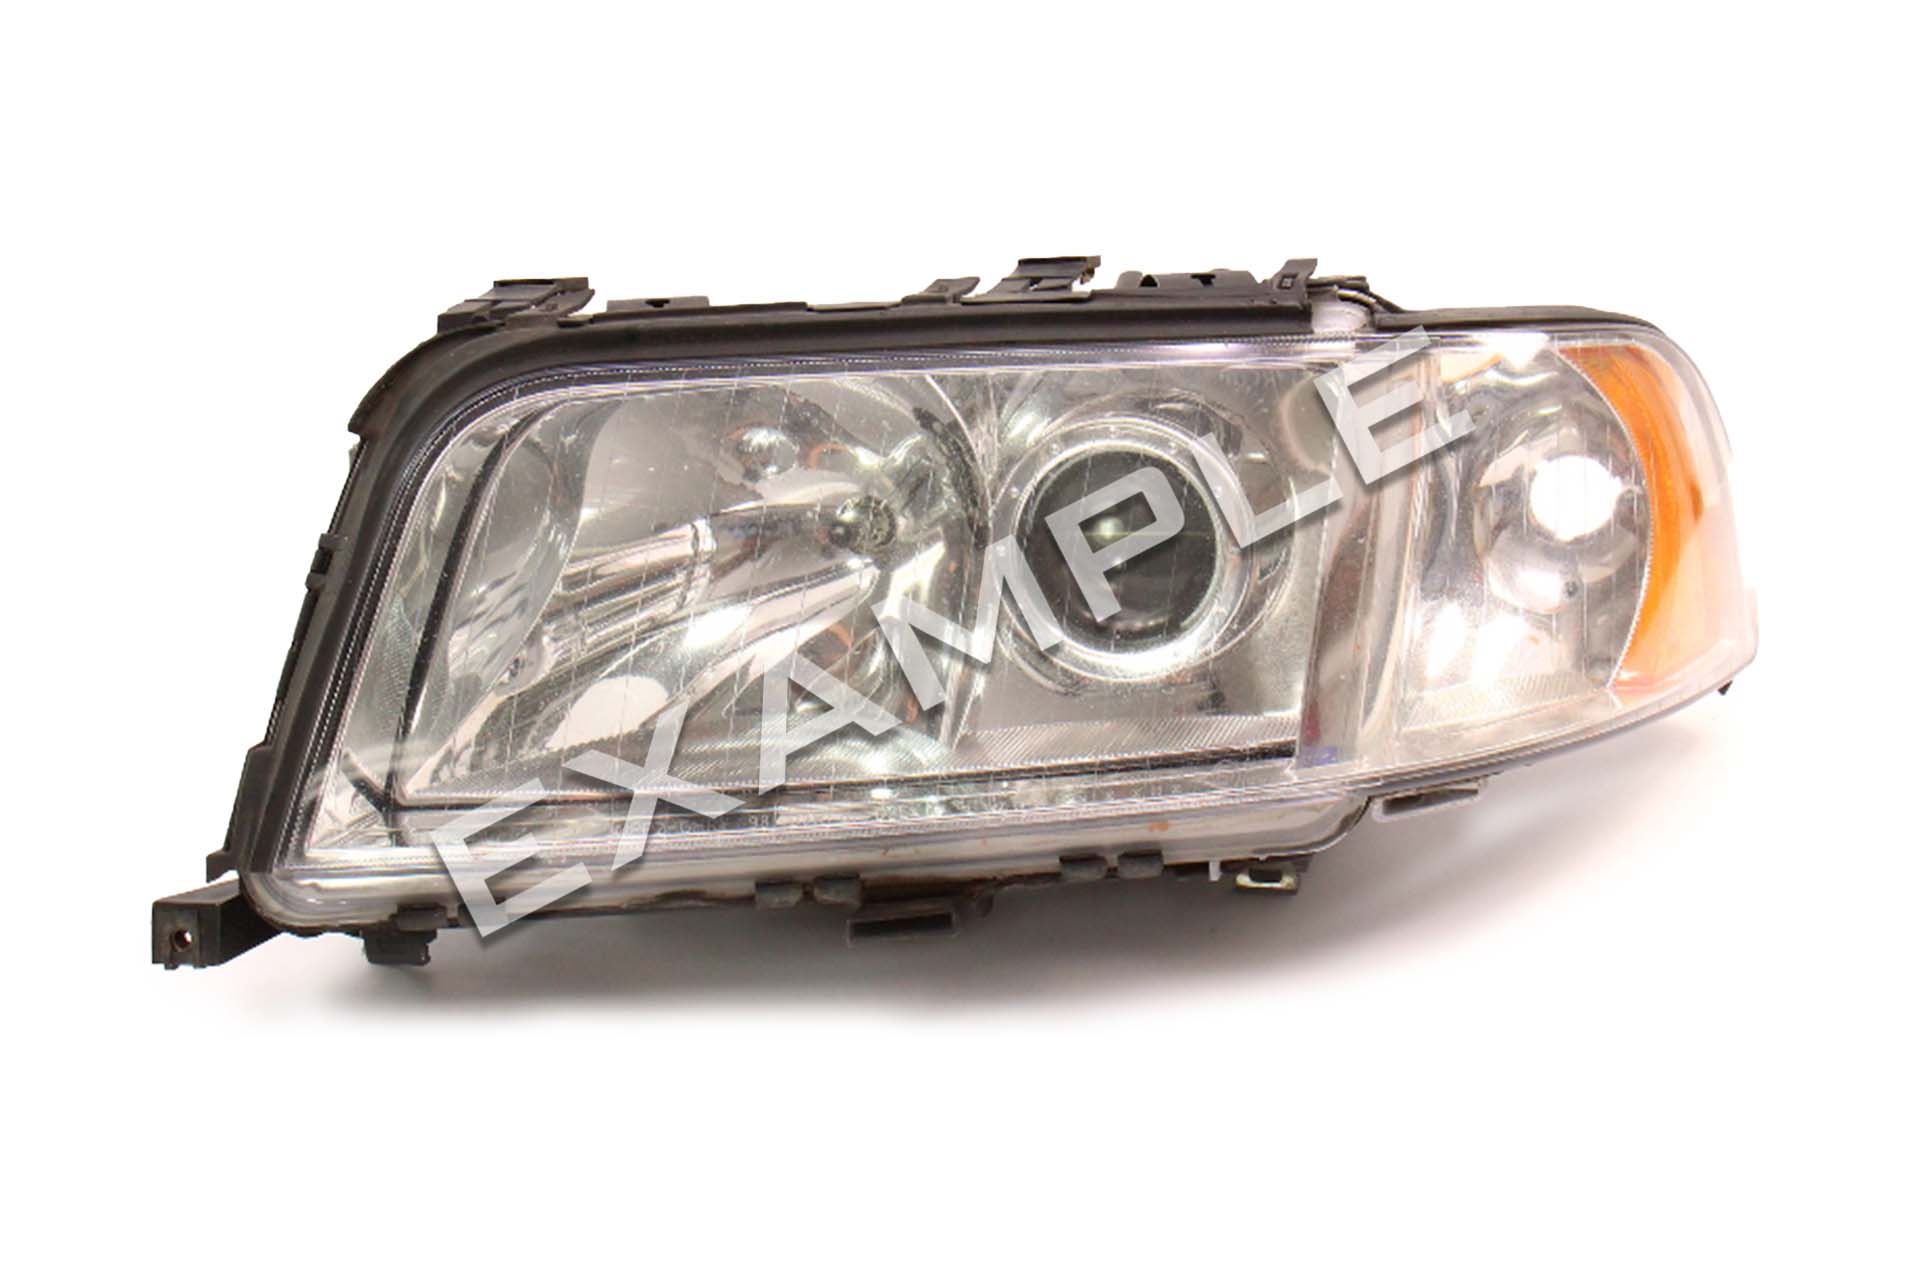 Audi A8 D2 99-02 bi-xenon licht reparatie & upgrade kit voor xenon koplampen